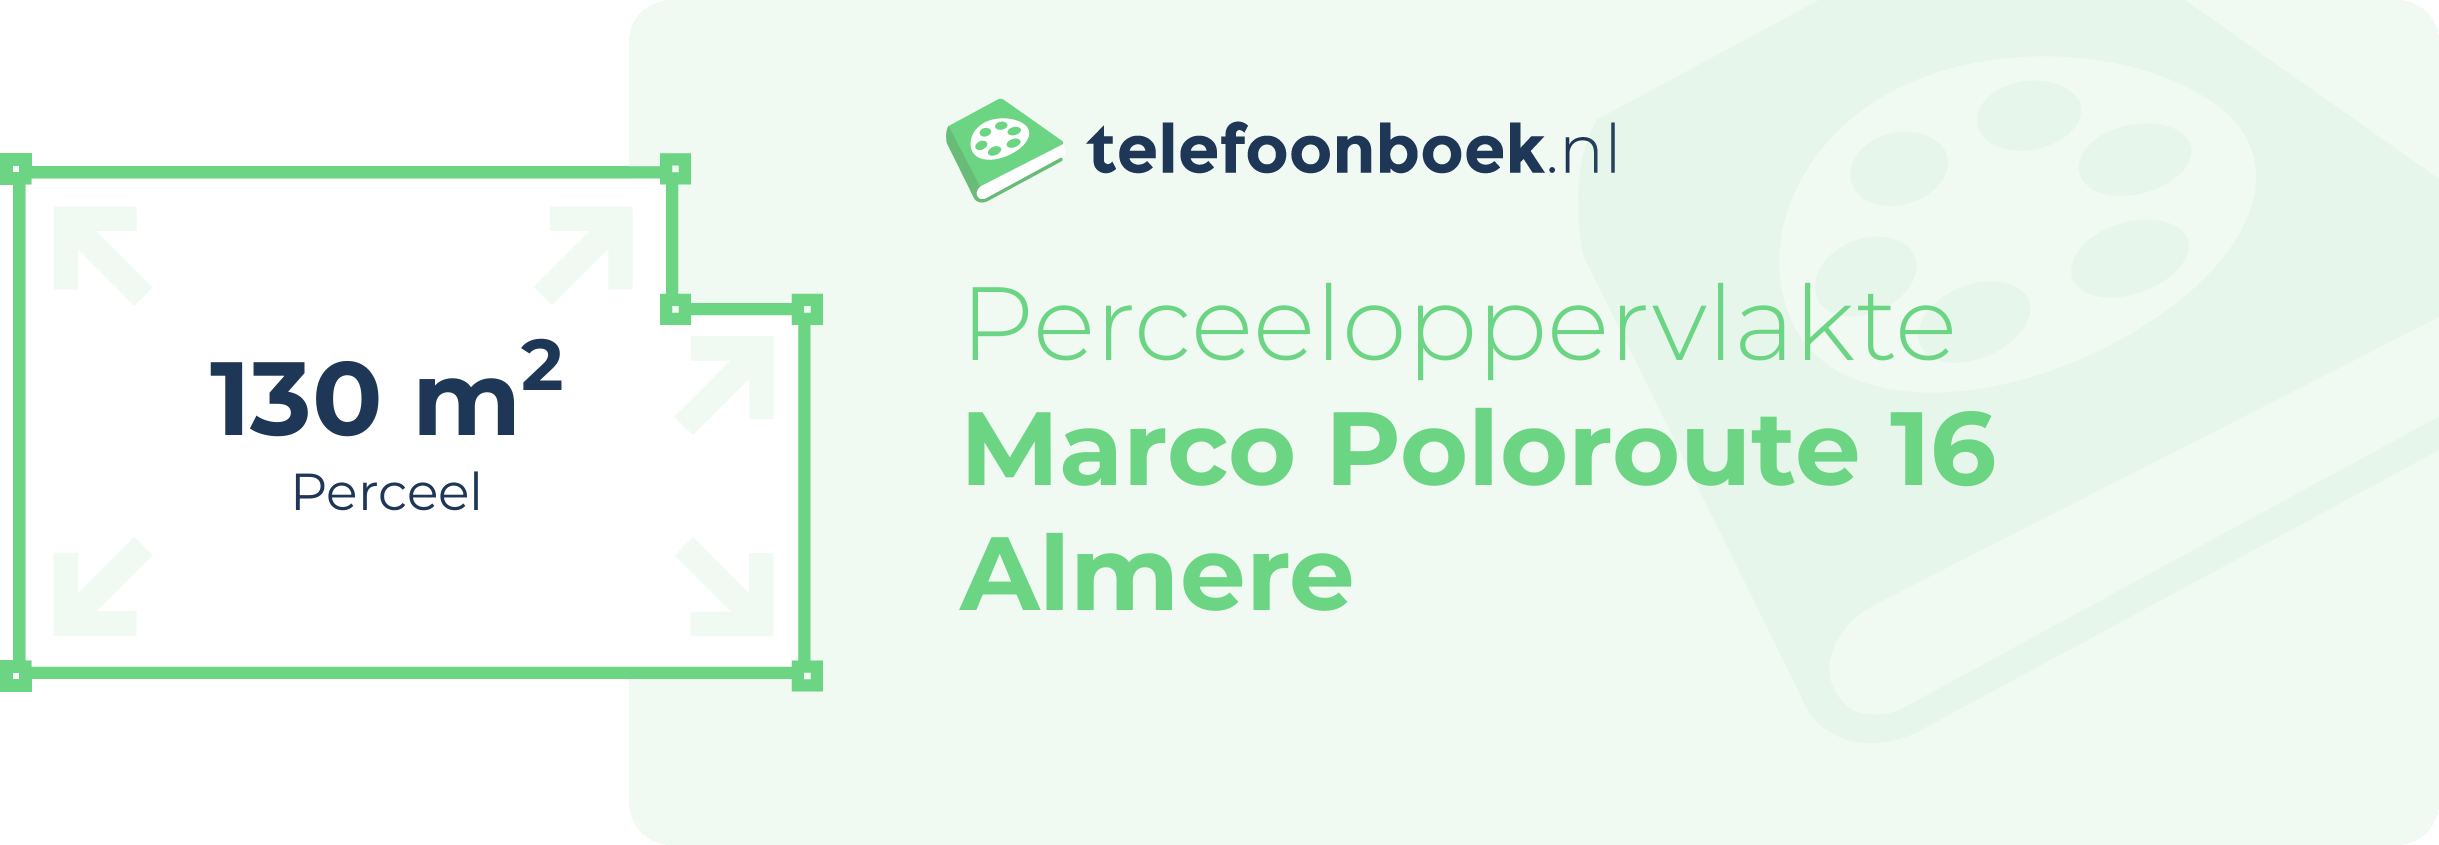 Perceeloppervlakte Marco Poloroute 16 Almere